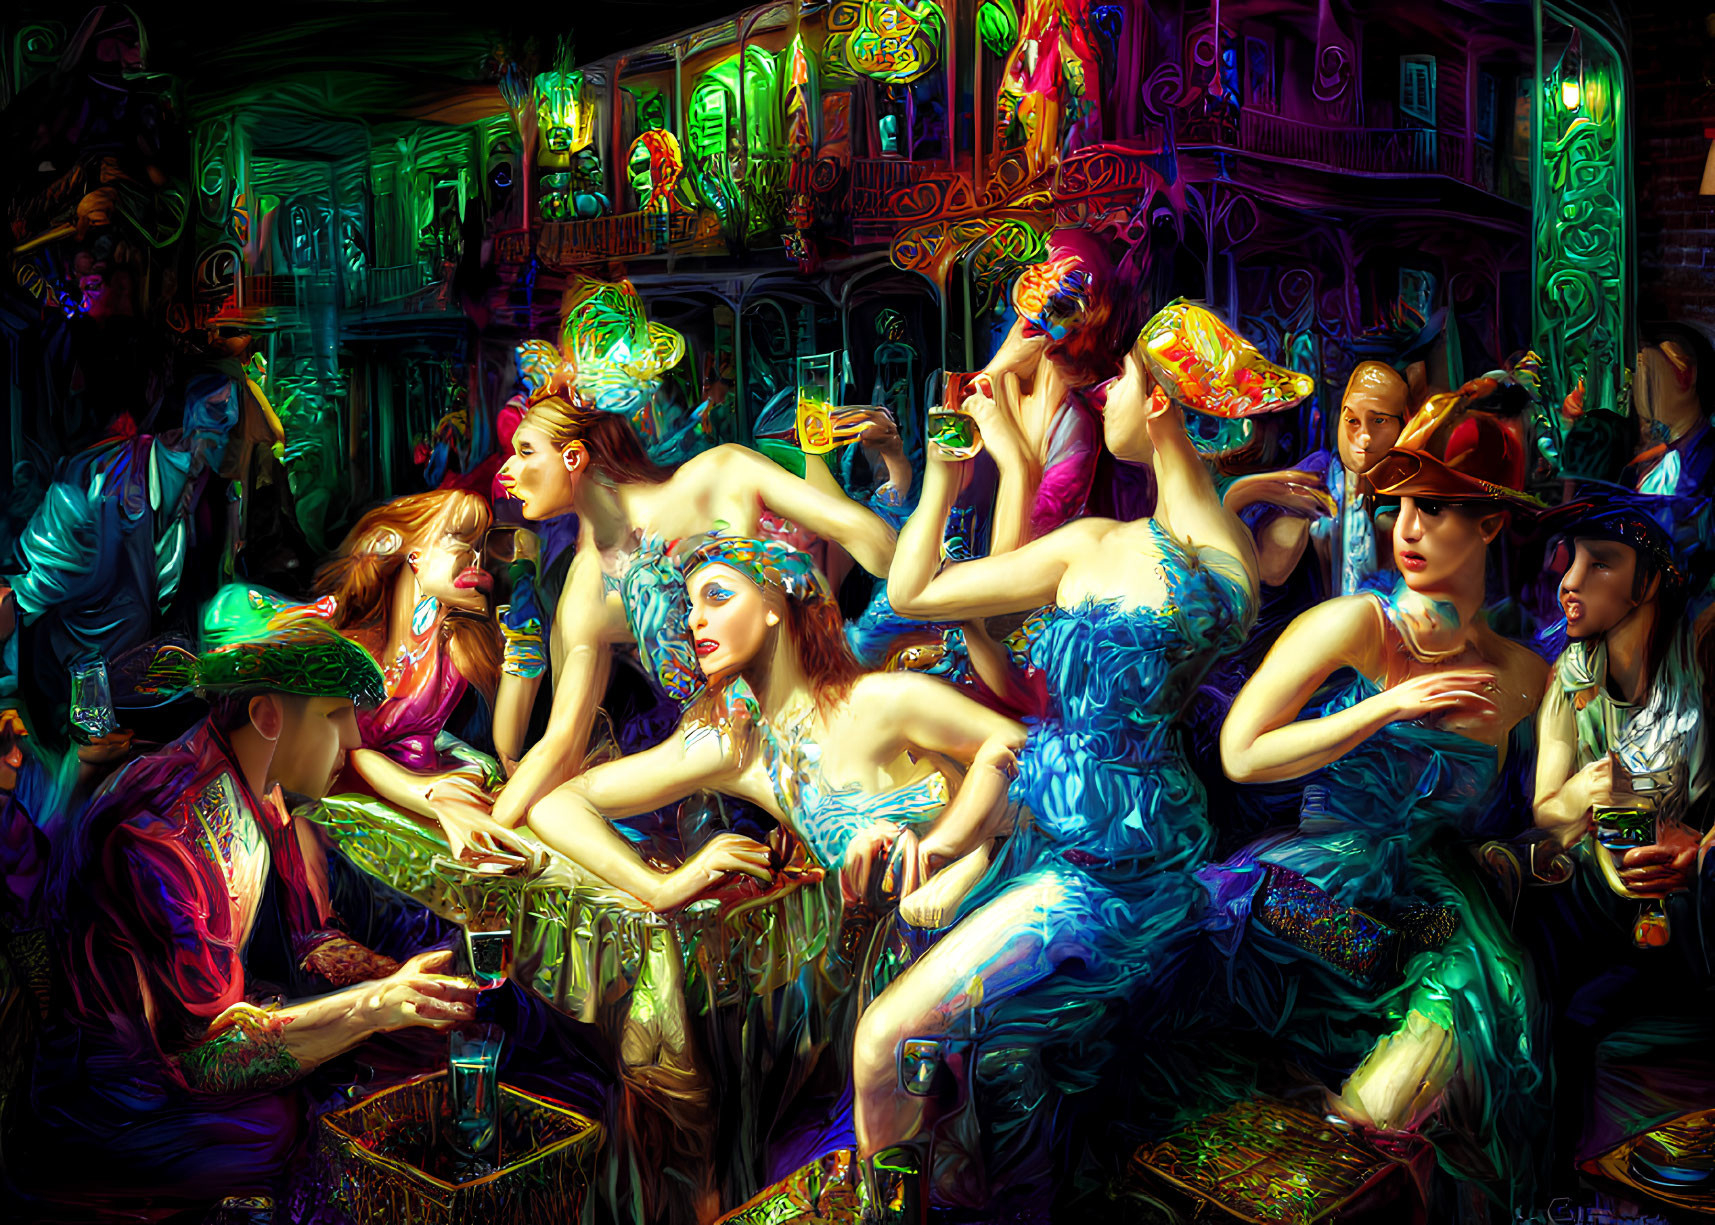 Colorful Painting of Elegantly Dressed People in Bar Scene